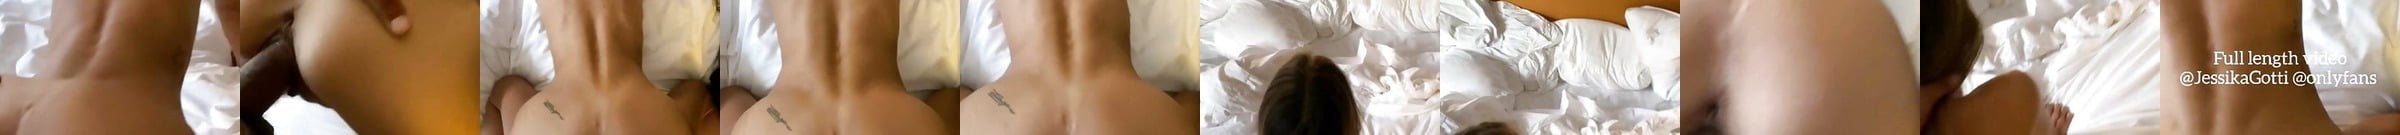 Jessika Gotti Gets Anal Creampie Onlyfans Free HD Porn 03 XHamster